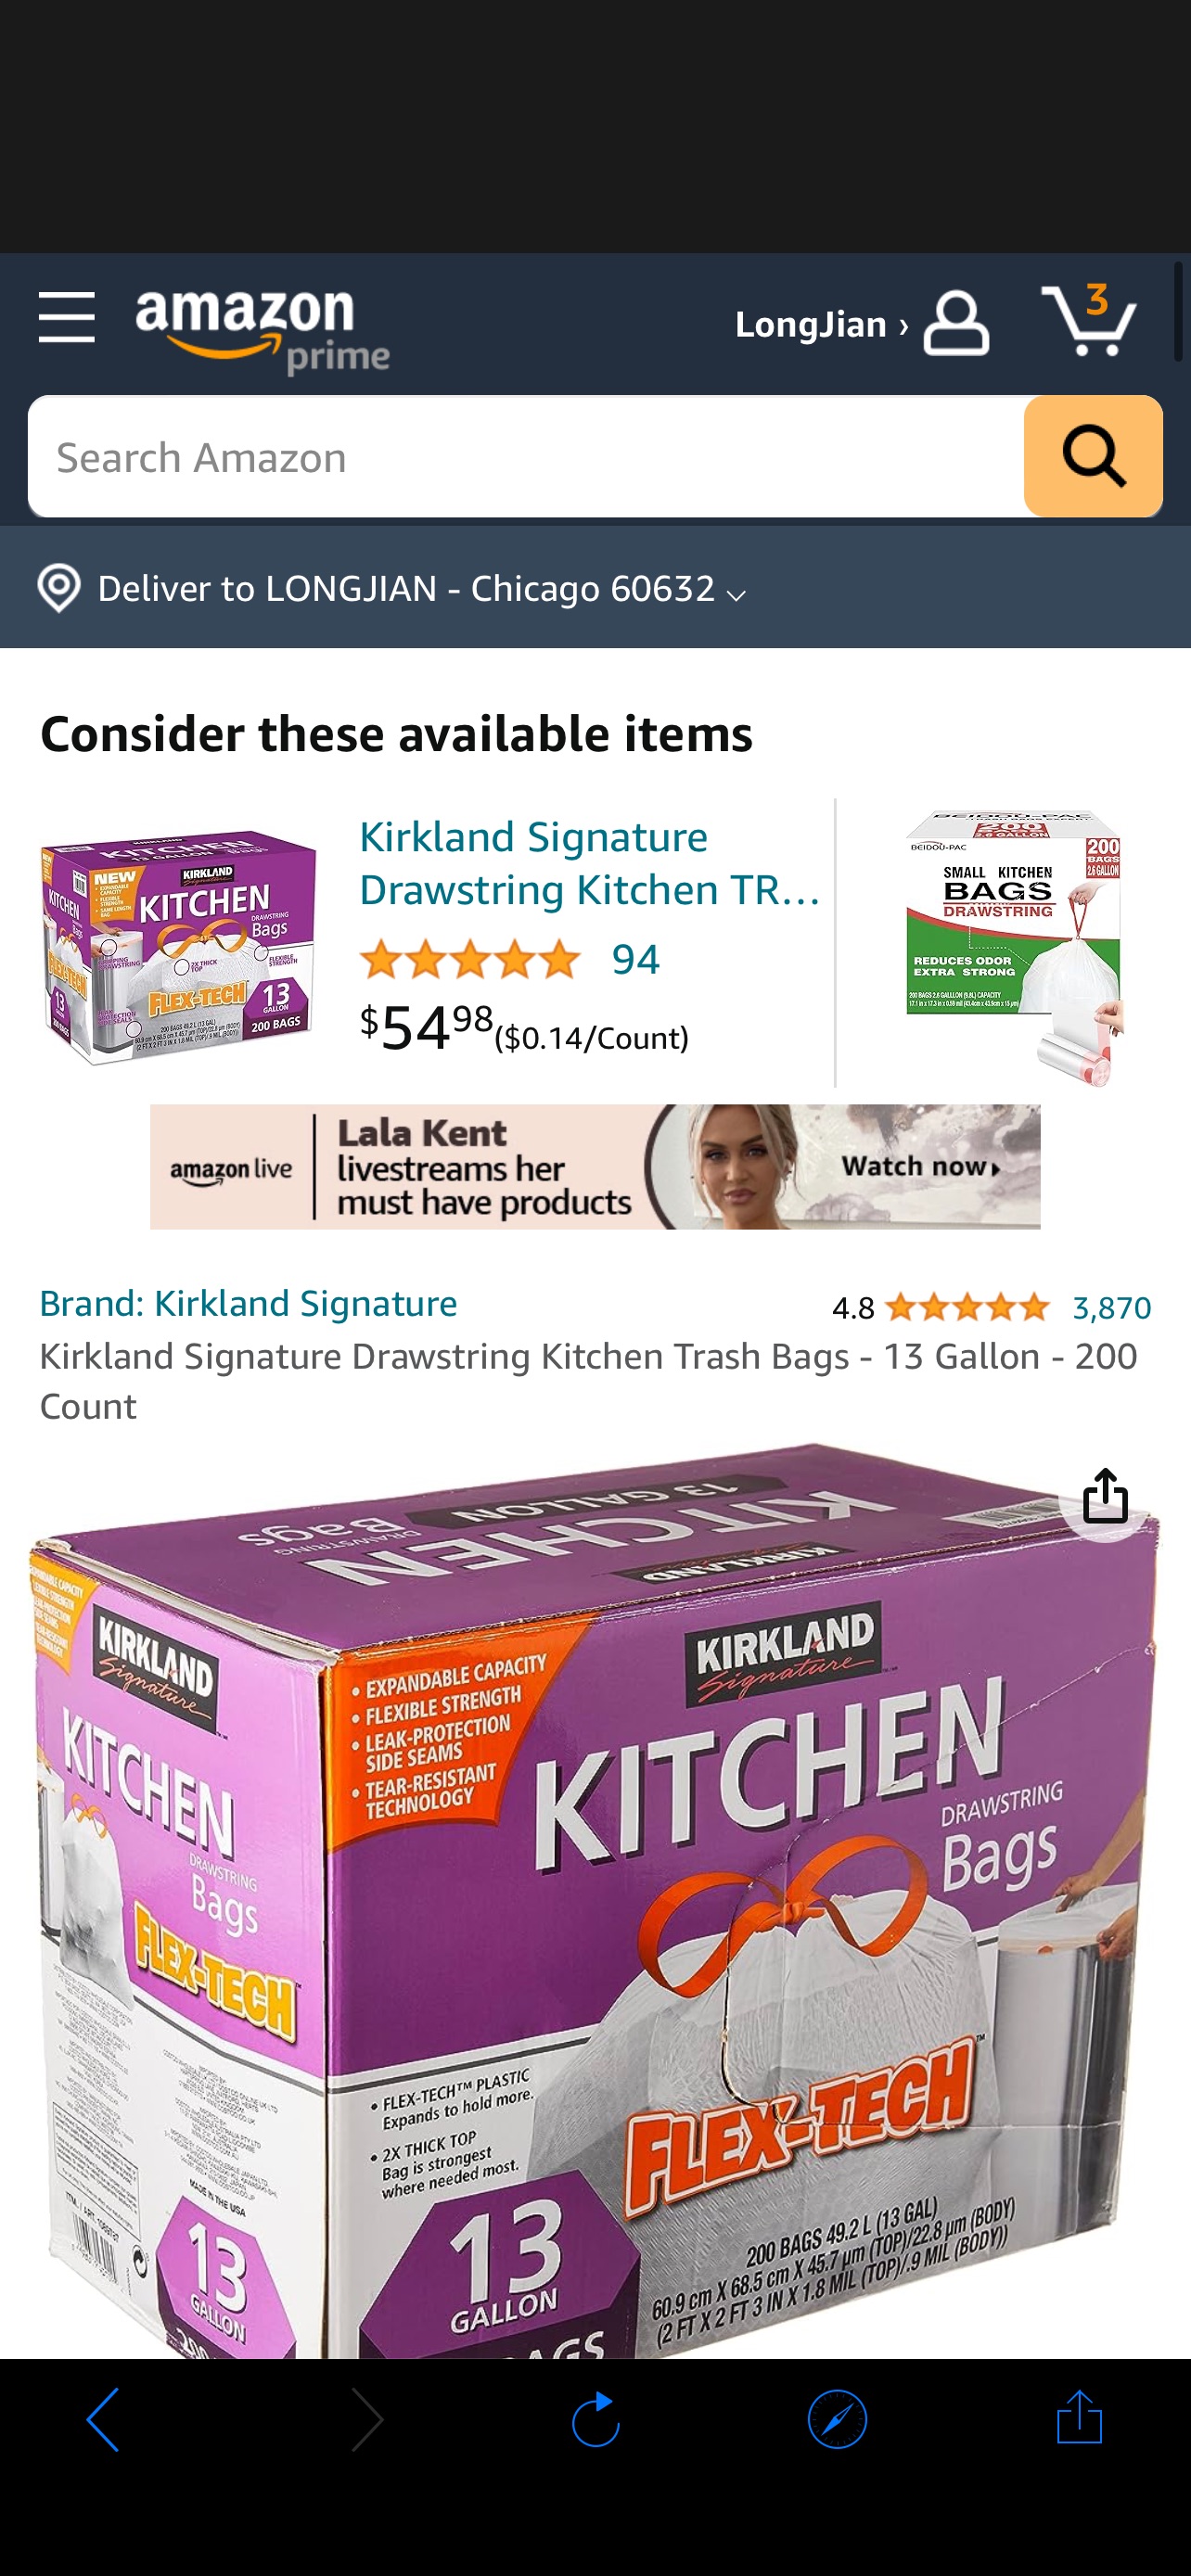 Amazon.com: Kirkland Signature Drawstring Kitchen Trash Bags - 13 Gallon - 200 Count : Health & Household 垃圾袋